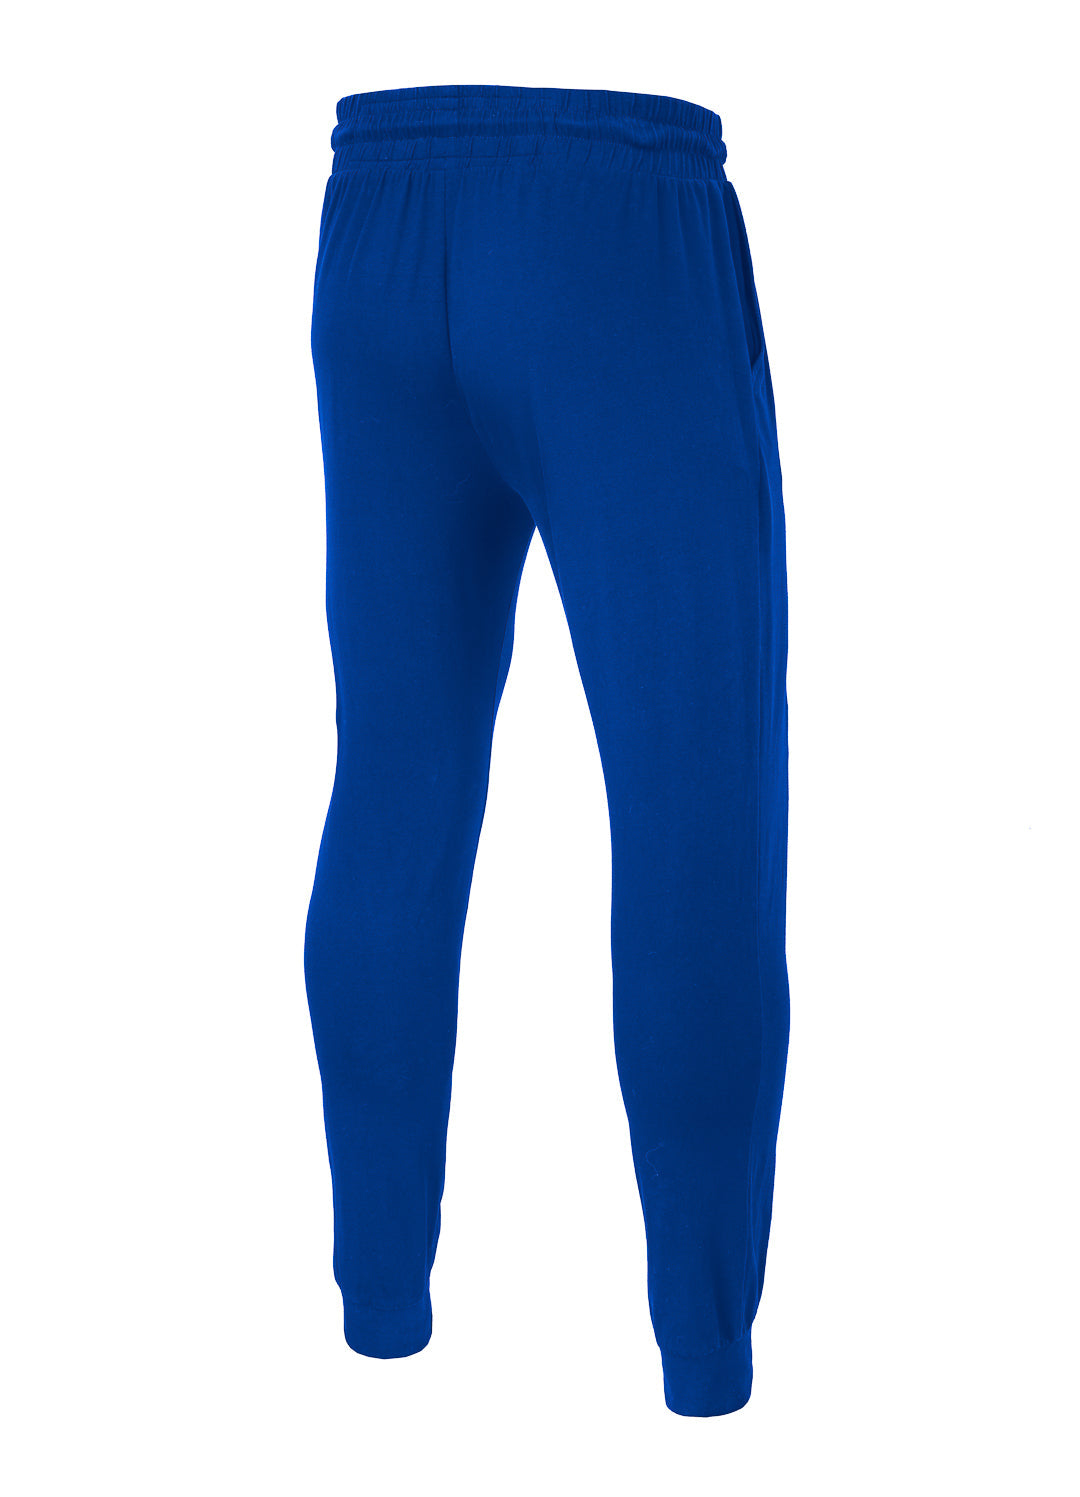 DURANGO Spandex Royal Blue Jogging Pants.